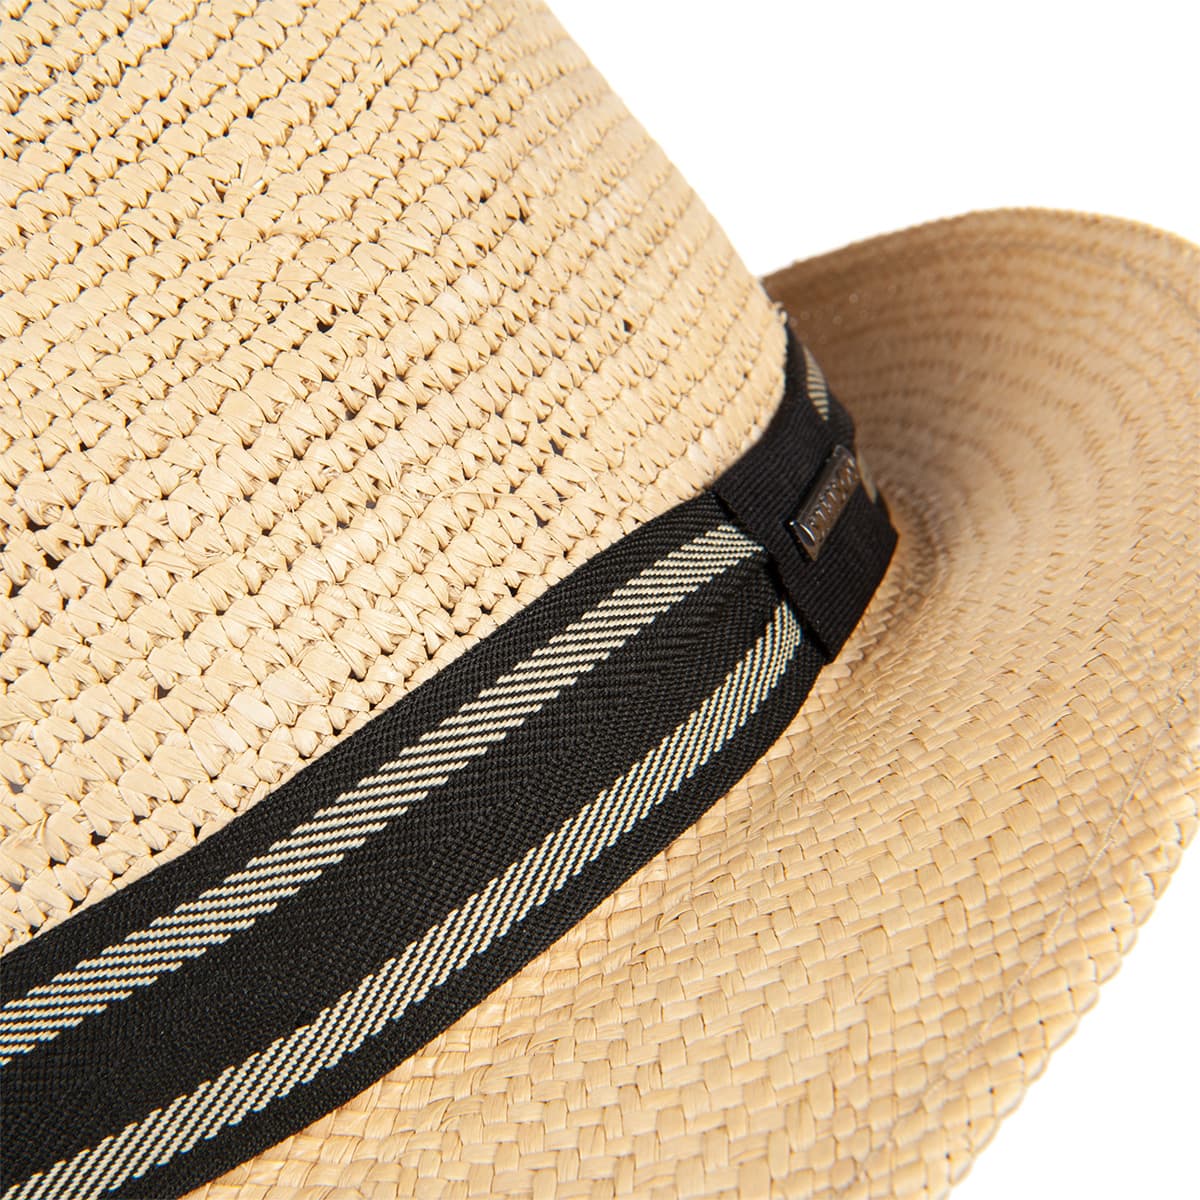 Crochet Traveller Panama Hat by Stetson - 219,00 €